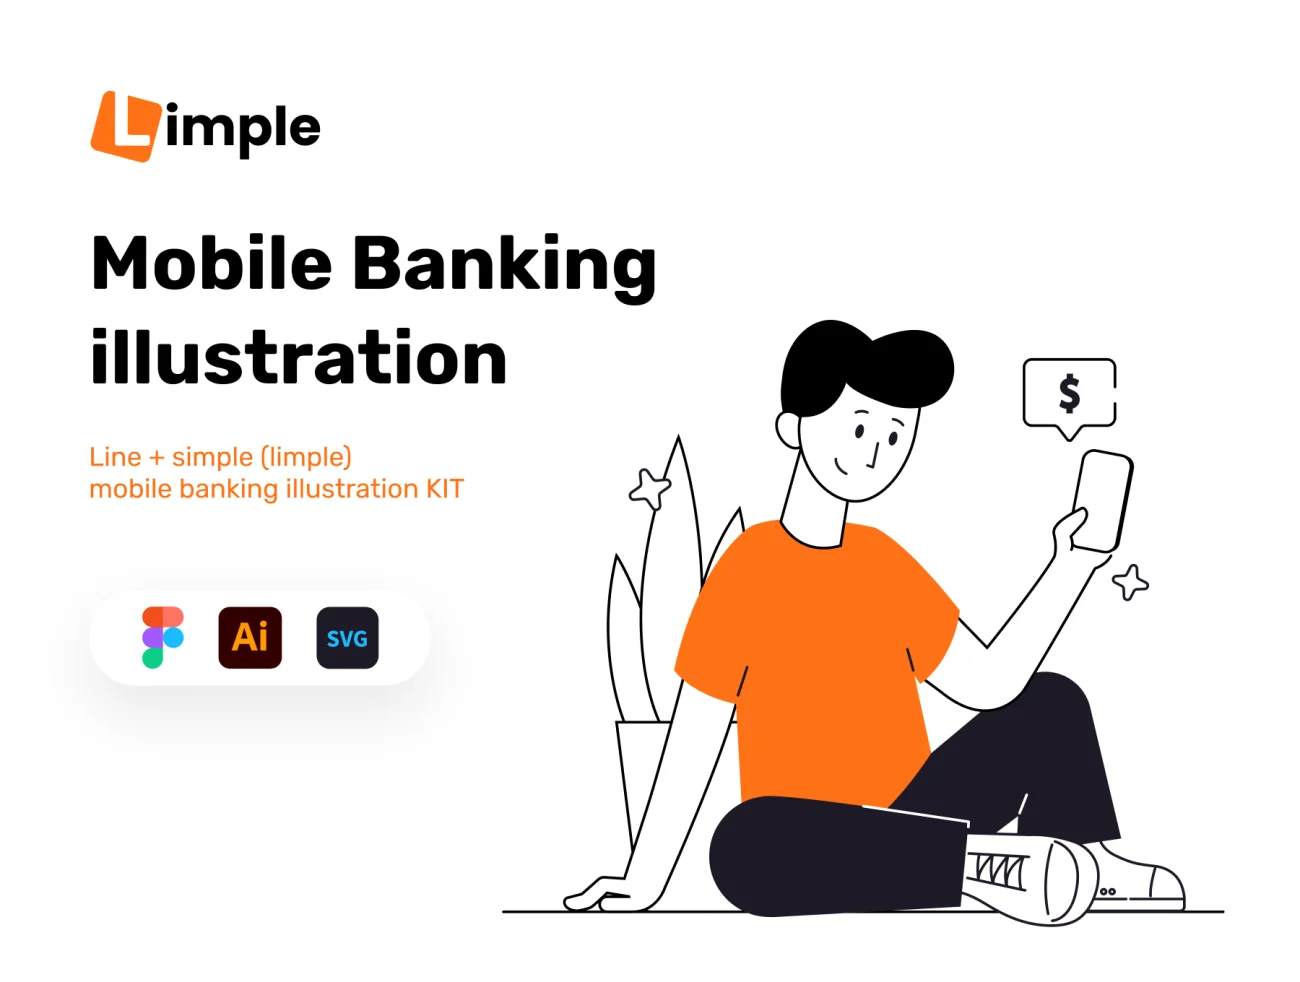 10个金融理财场景卡通风格插画合集 Limple – Mobile Banking Illustration KIT插图1